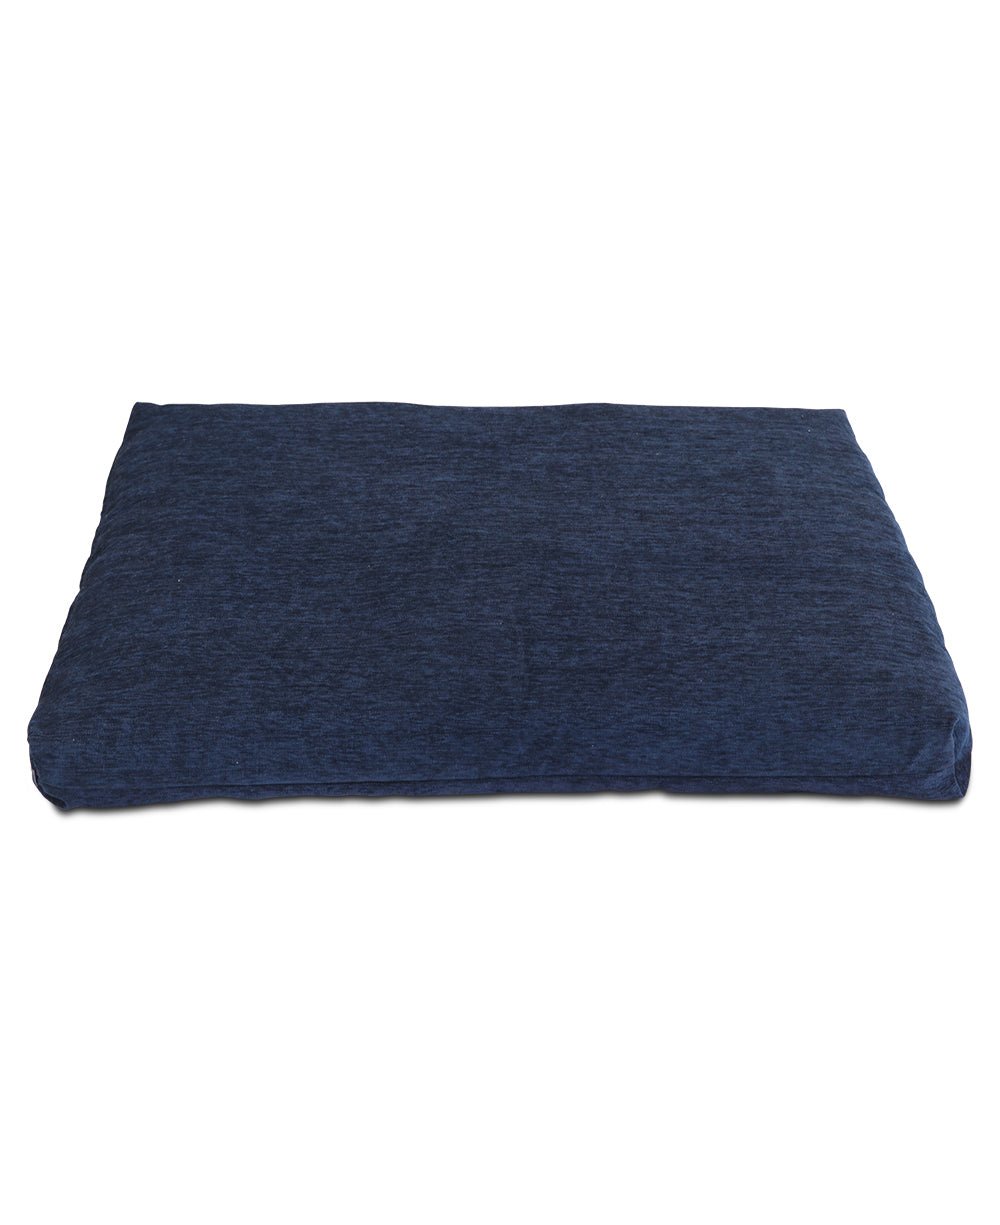 Deep Blue Chenille Zabuton Meditation Cushion - Massage Cushions